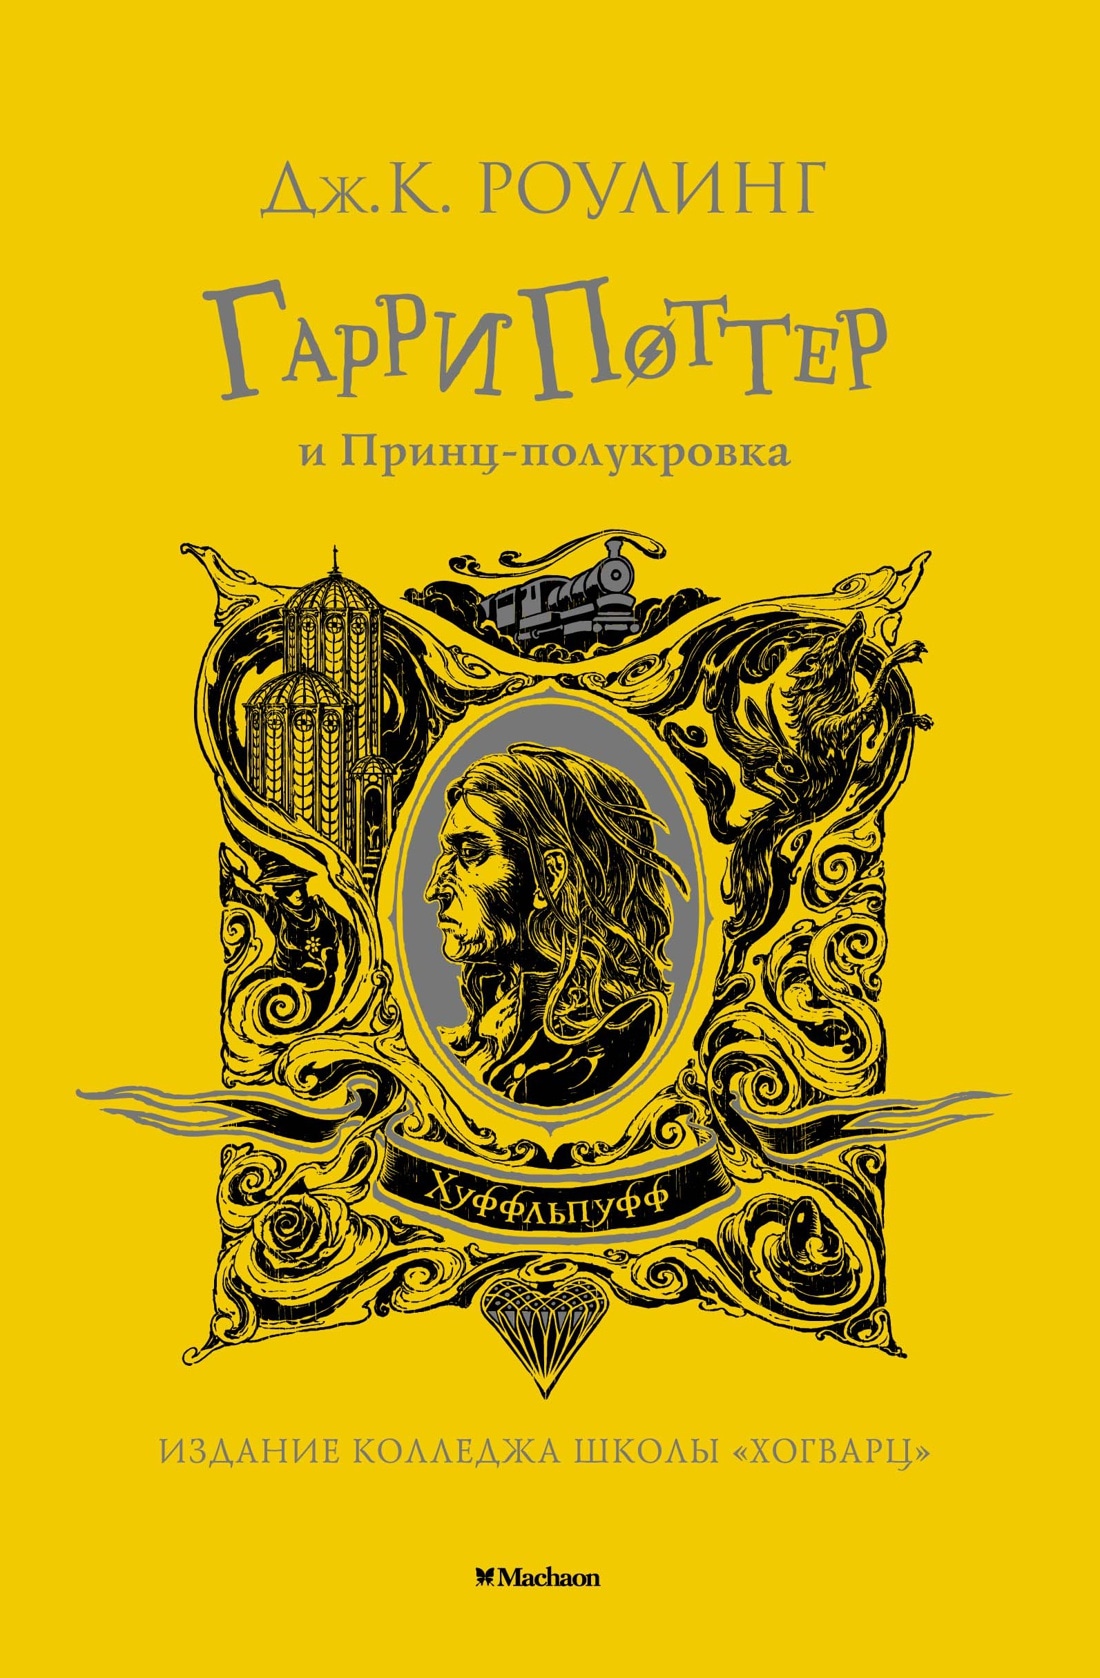 Book “Гарри Поттер и Принц-полукровка (Хуффльпуфф)” by Дж.К. Роулинг — 2022